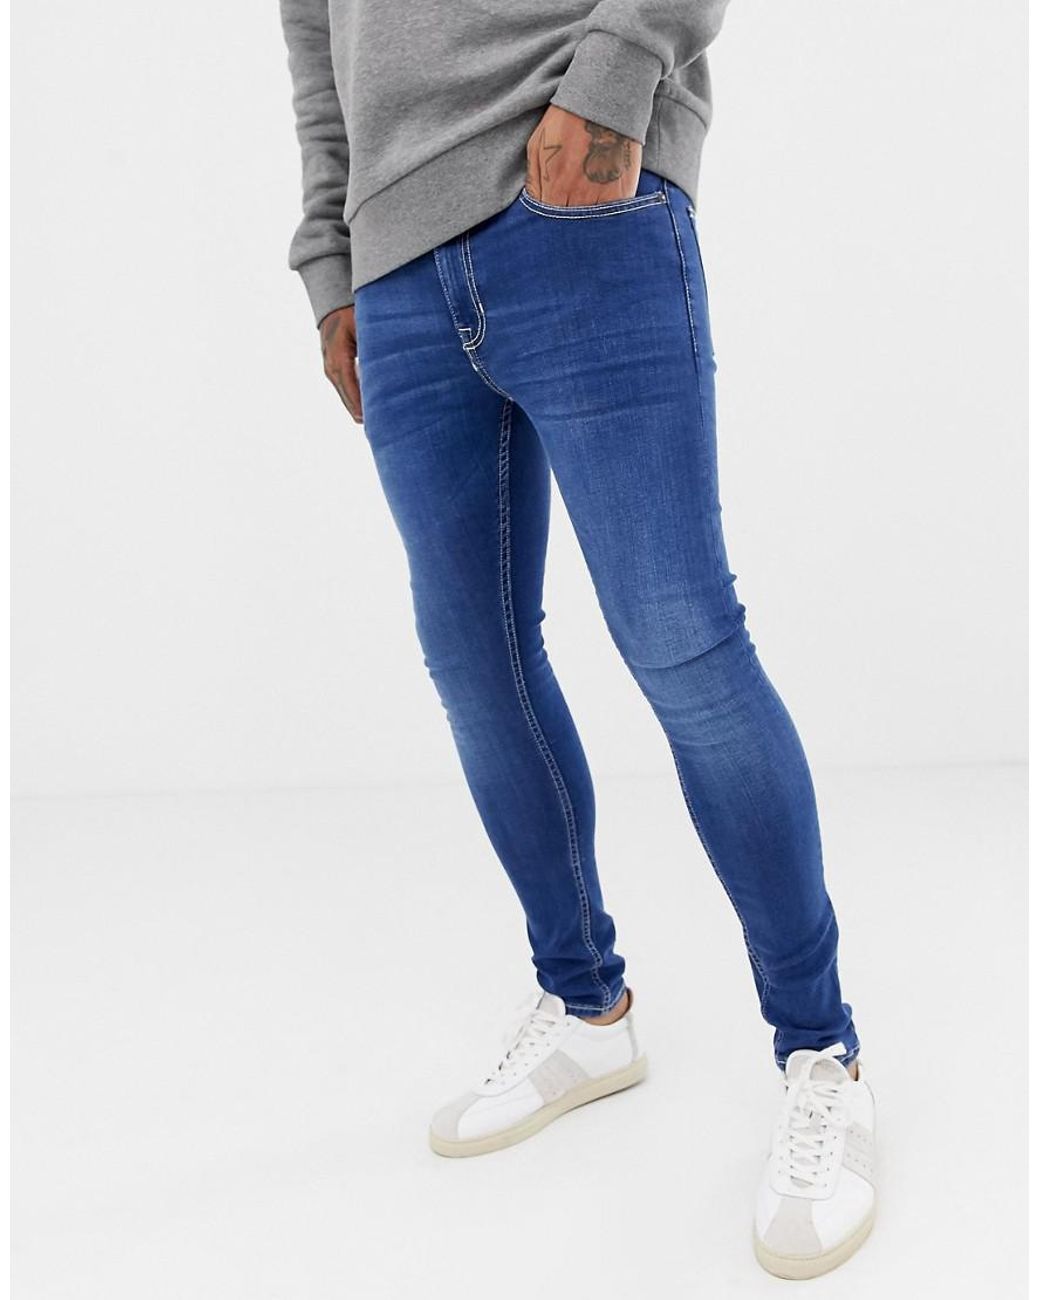 New Look Denim Super Skinny Jeans In Blue Wash for Men - Lyst